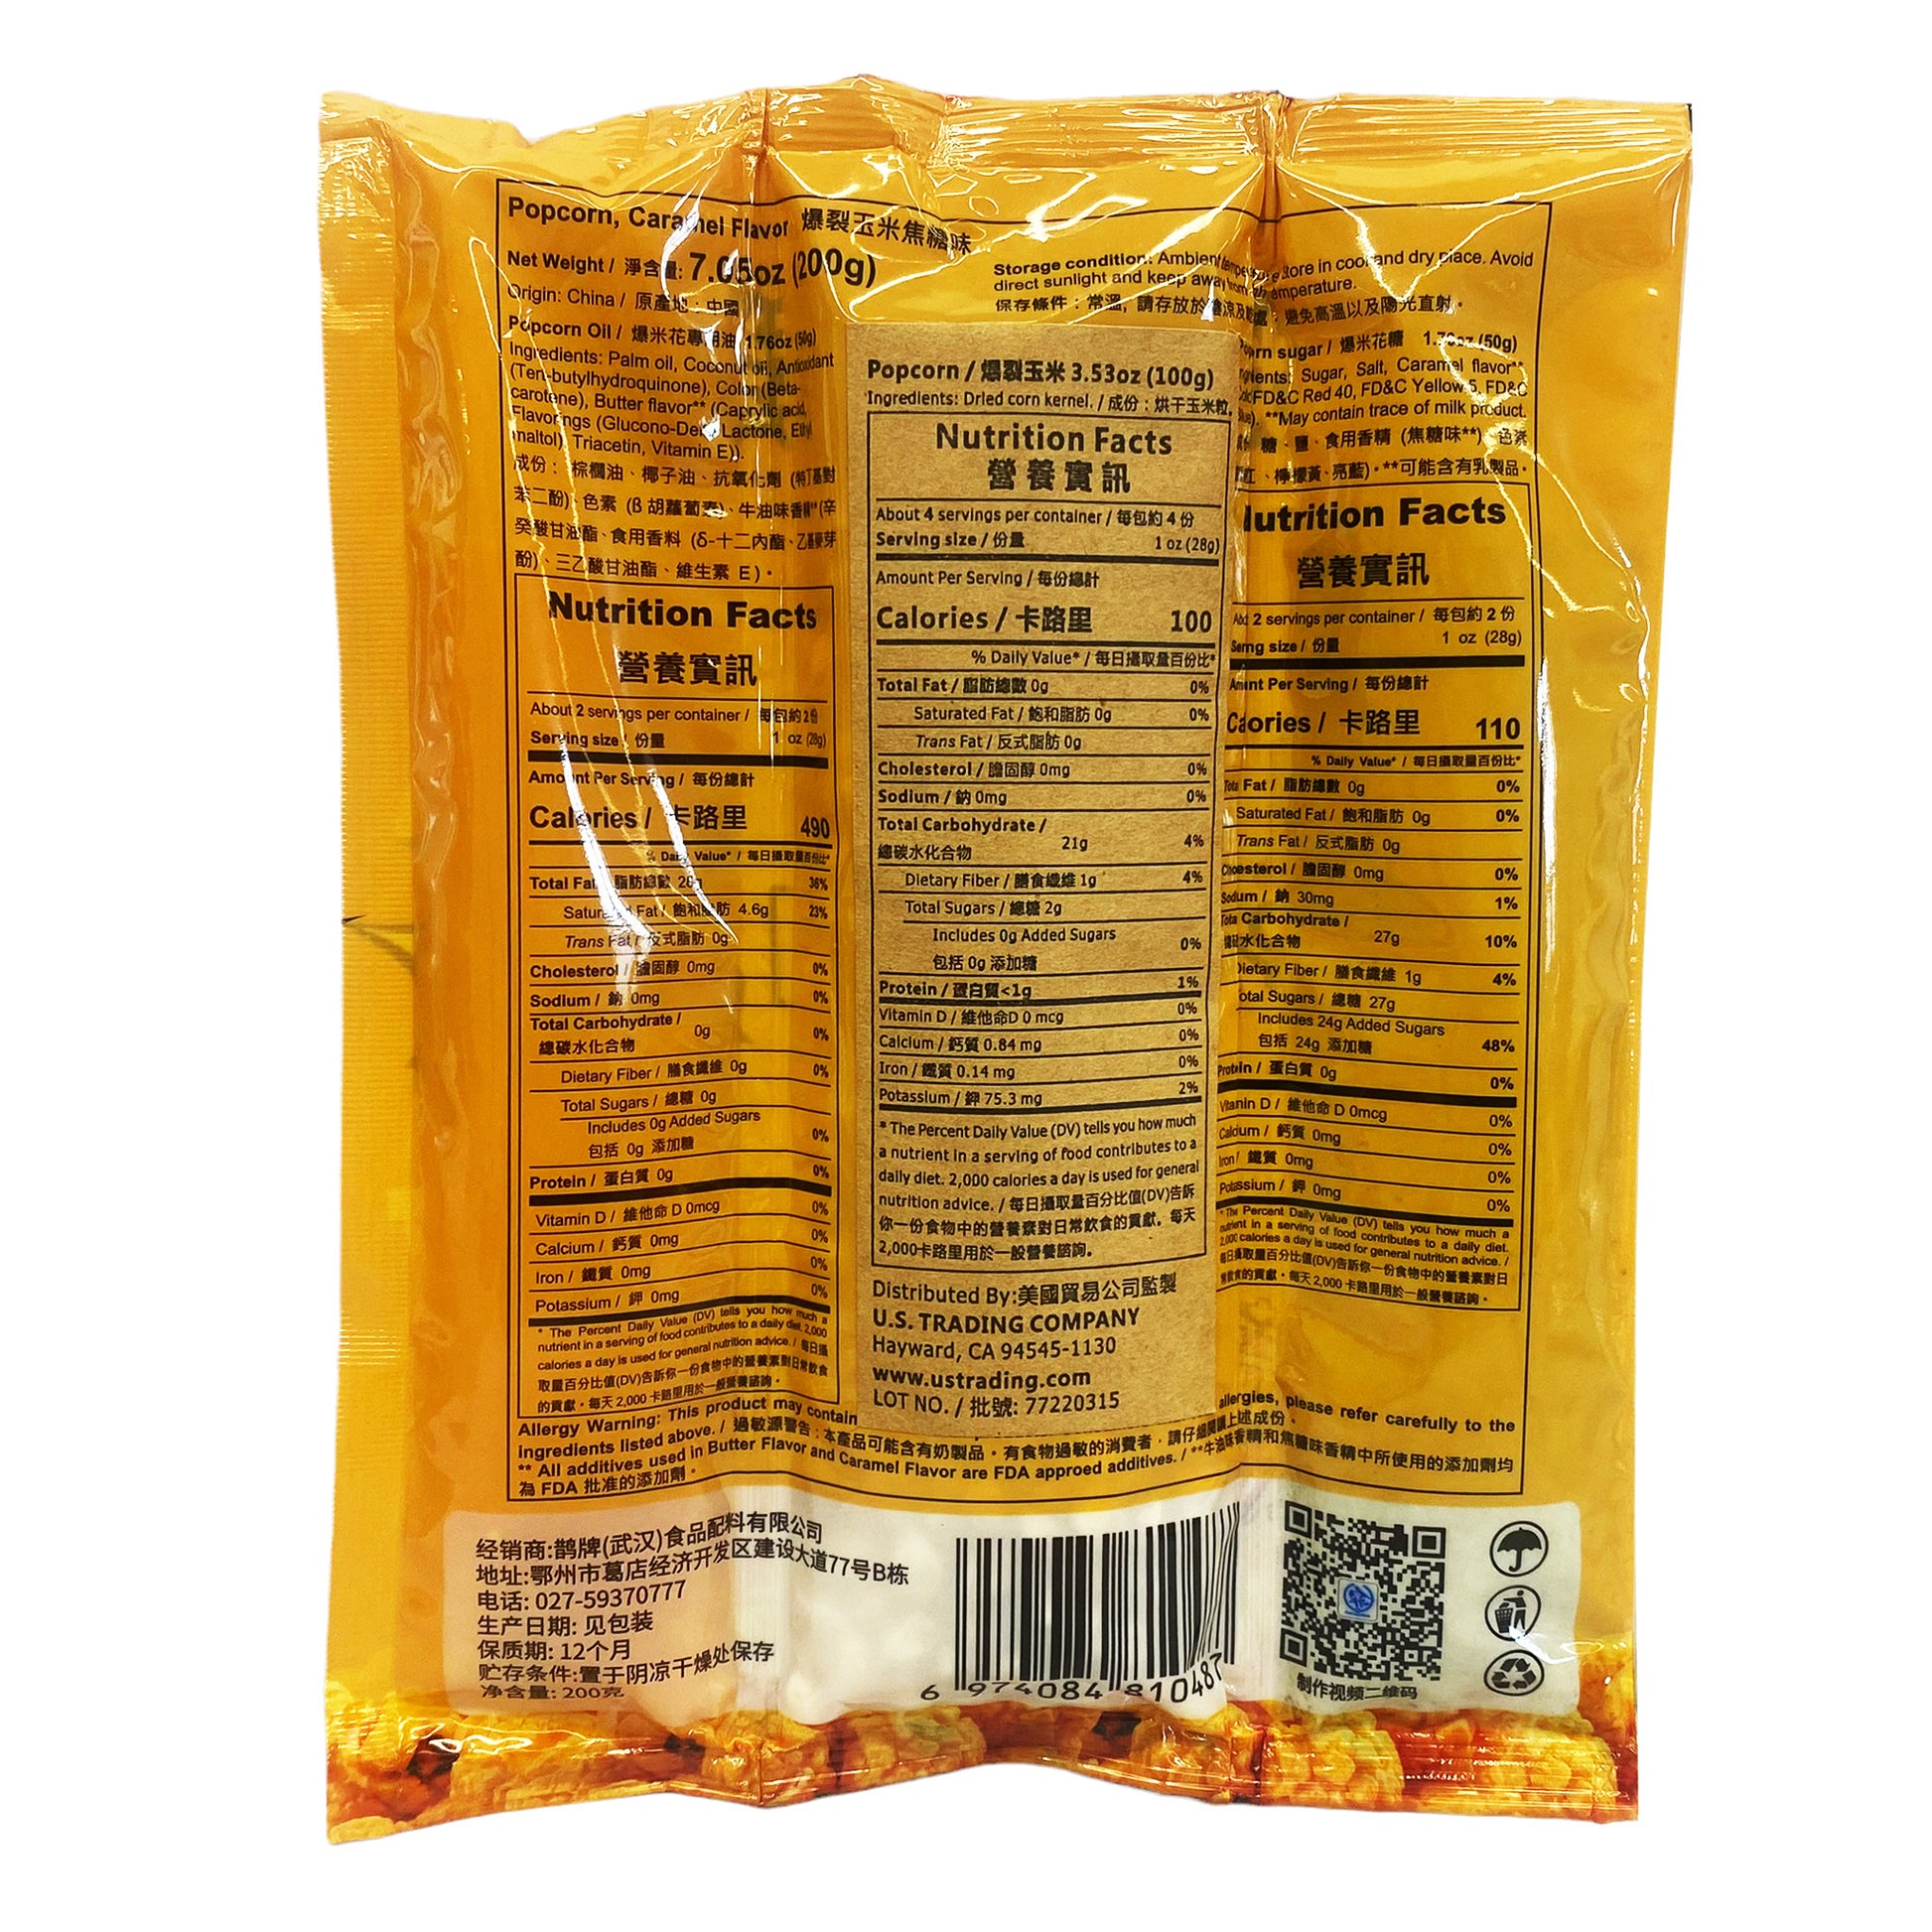 Back graphic image of Food Ingredients Popcorn Kit - Caramel Flavor 7.05oz (200g) - 鹊牌 爆裂玉米花套装 - 焦糖味 7.05oz (200g)